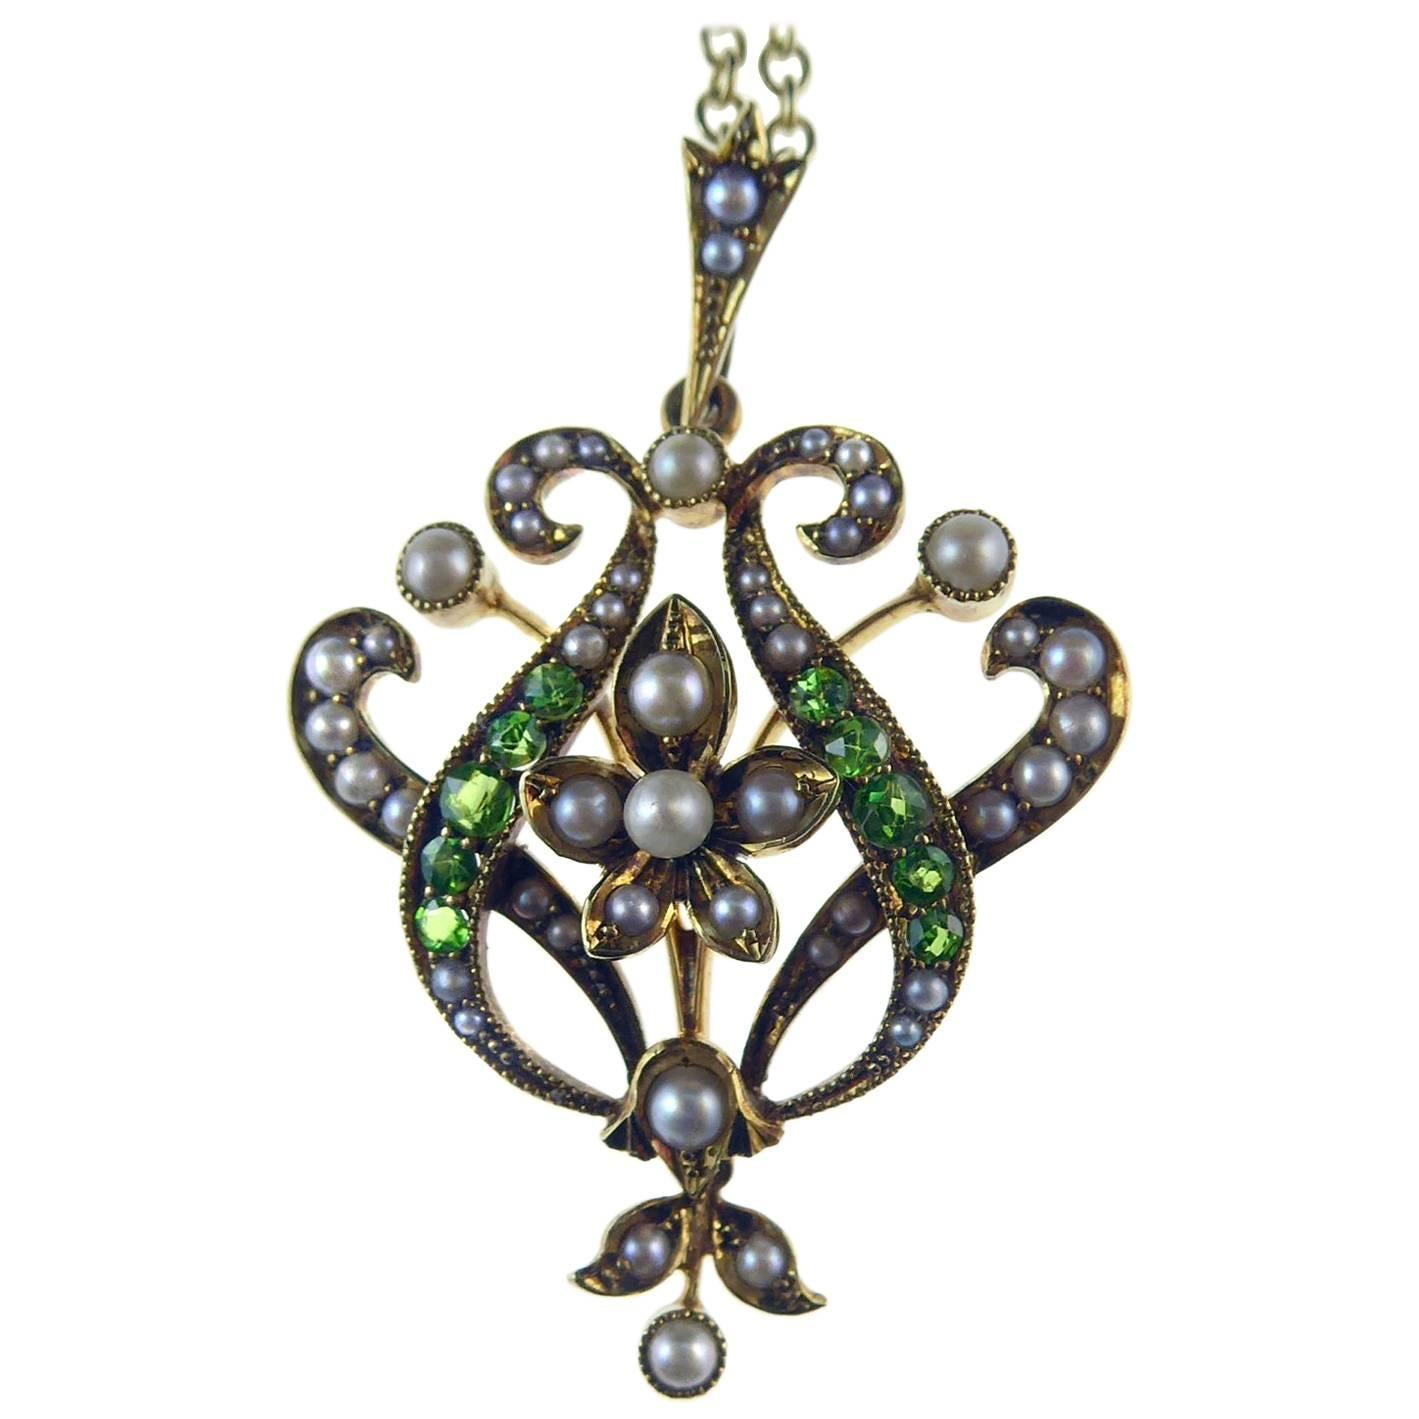 Antique Art Nouveau Pendant, 15 Carat Gold with Demantoid Garnet and Seed Pearls